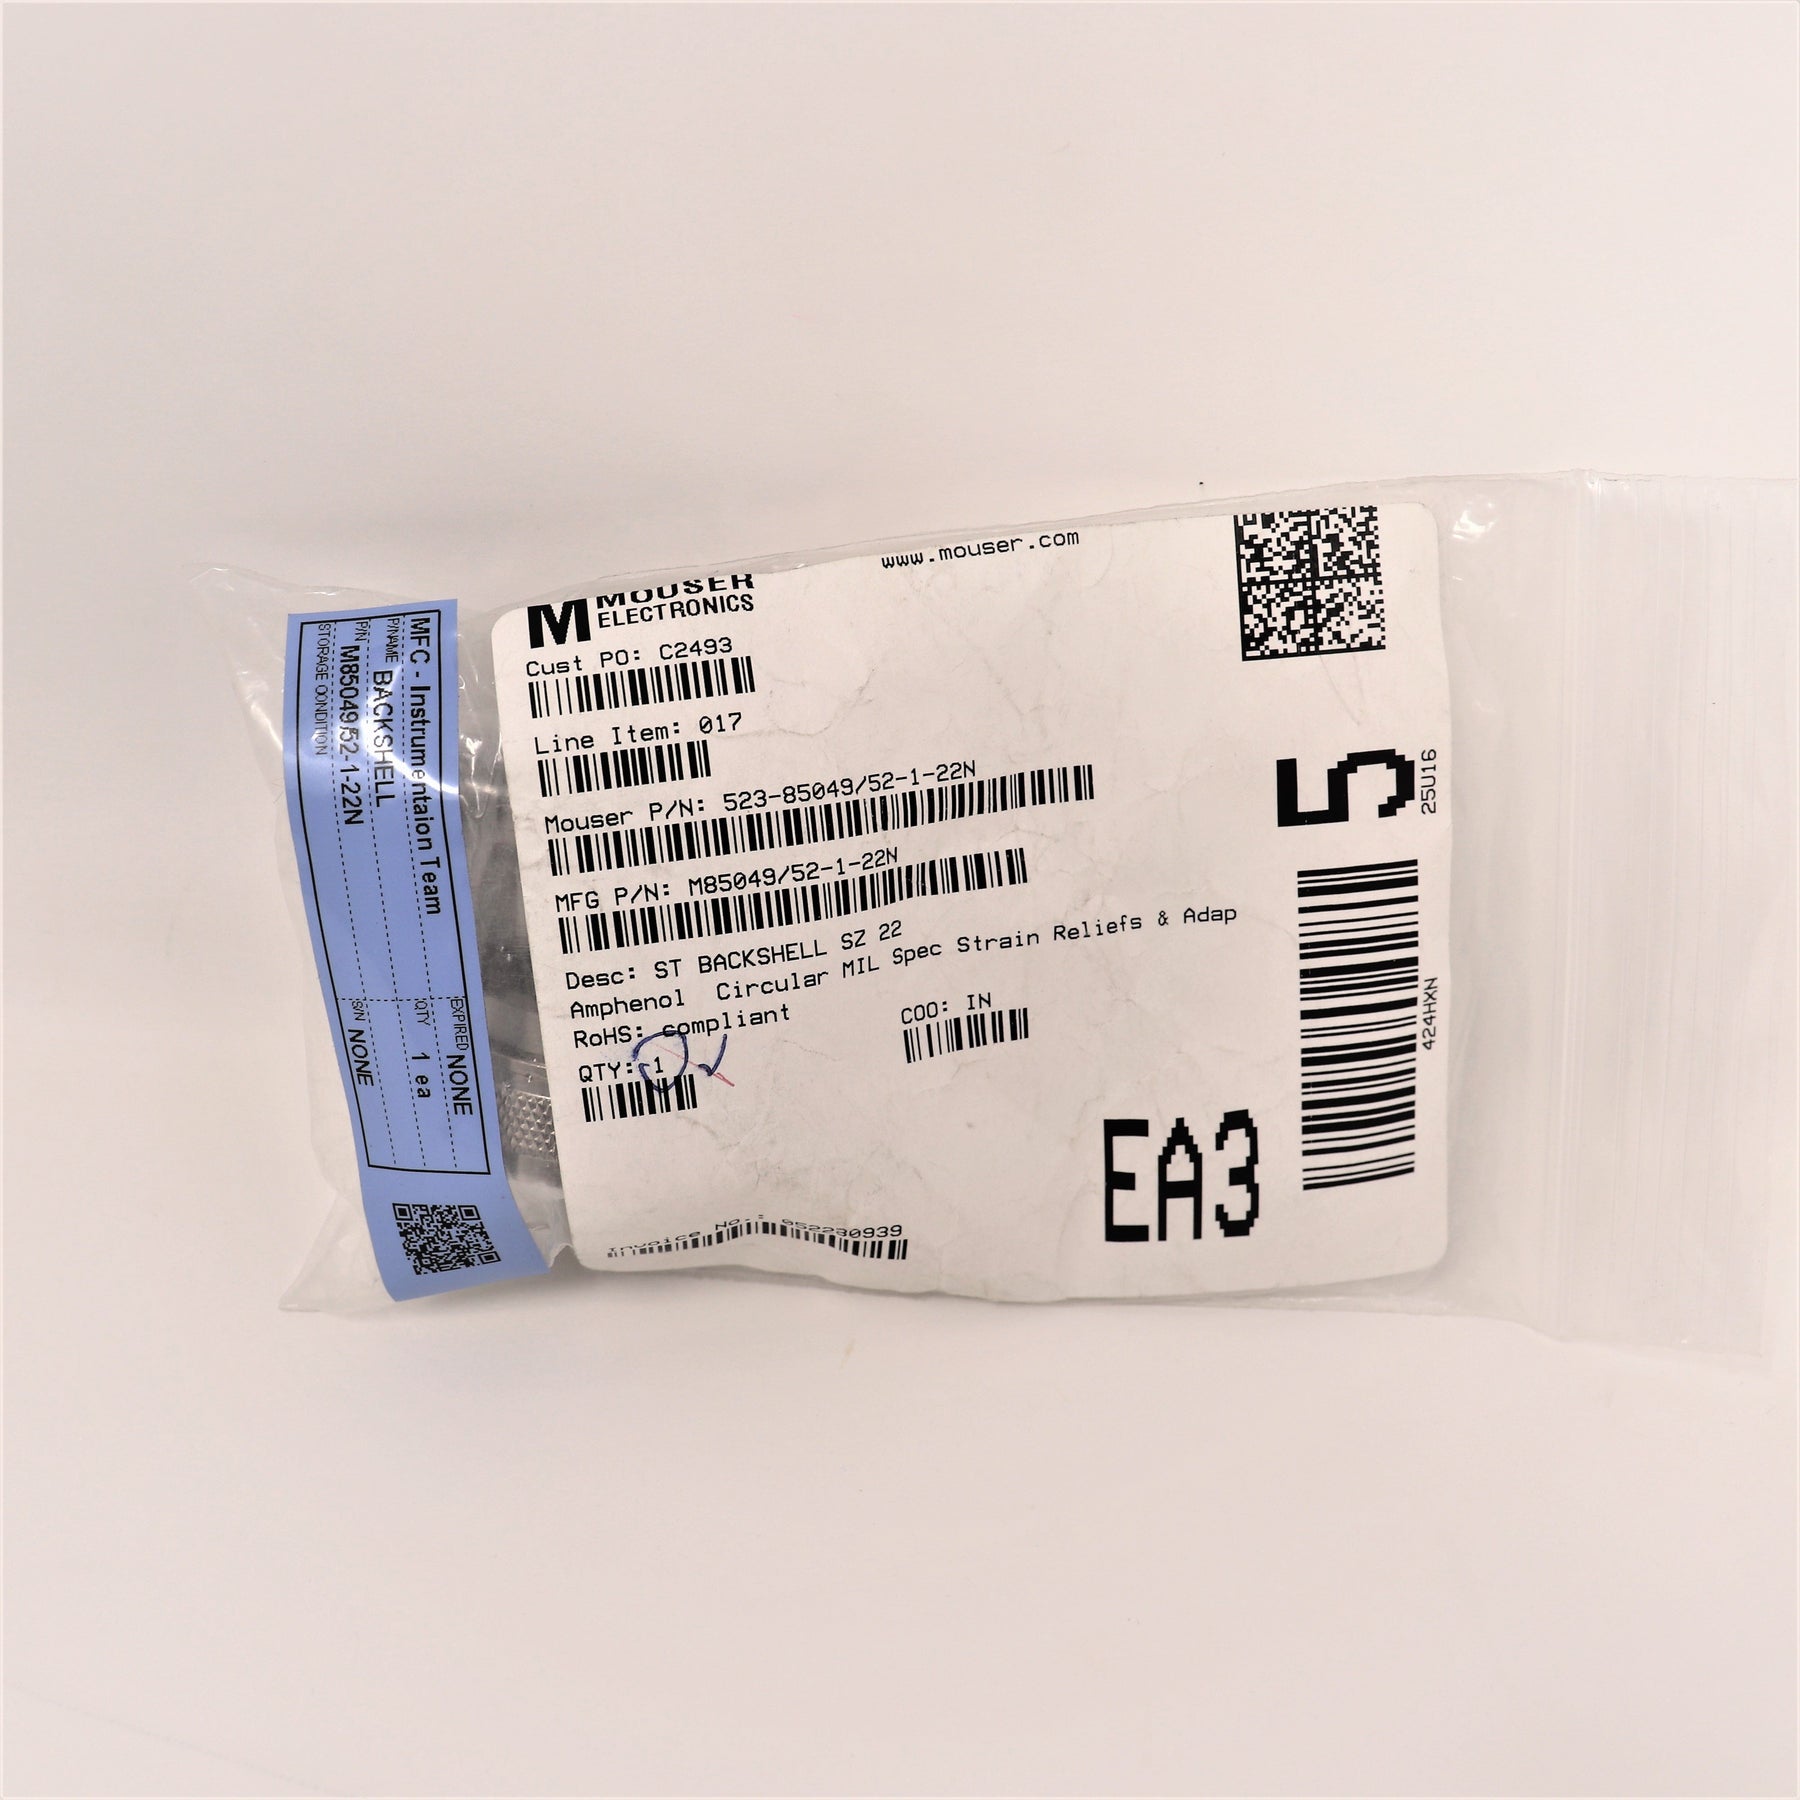 Amphenol Backshell Strain Relief M85049/52-1-22N